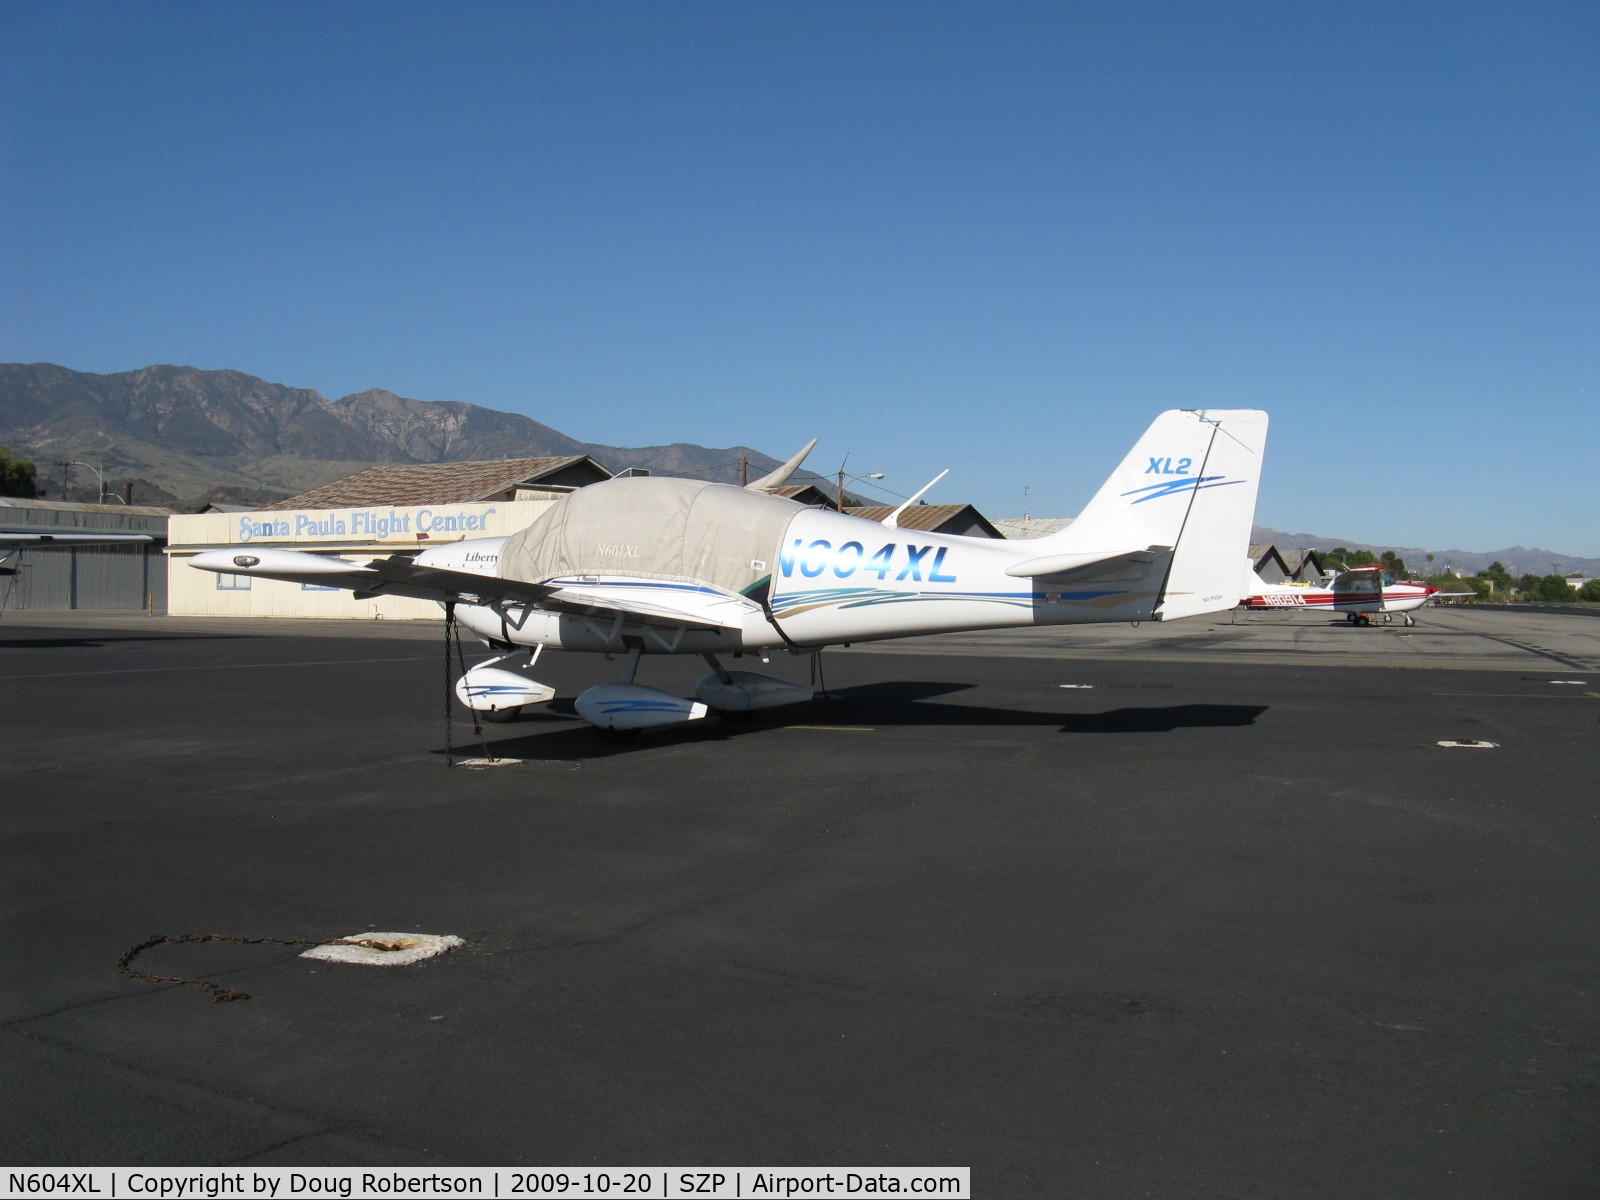 N604XL, 2007 Liberty XL-2 C/N 0080, 2007 Liberty Aerospace LIBERTY XL-2, Continental IOF-240-B 125 Hp with FADEC